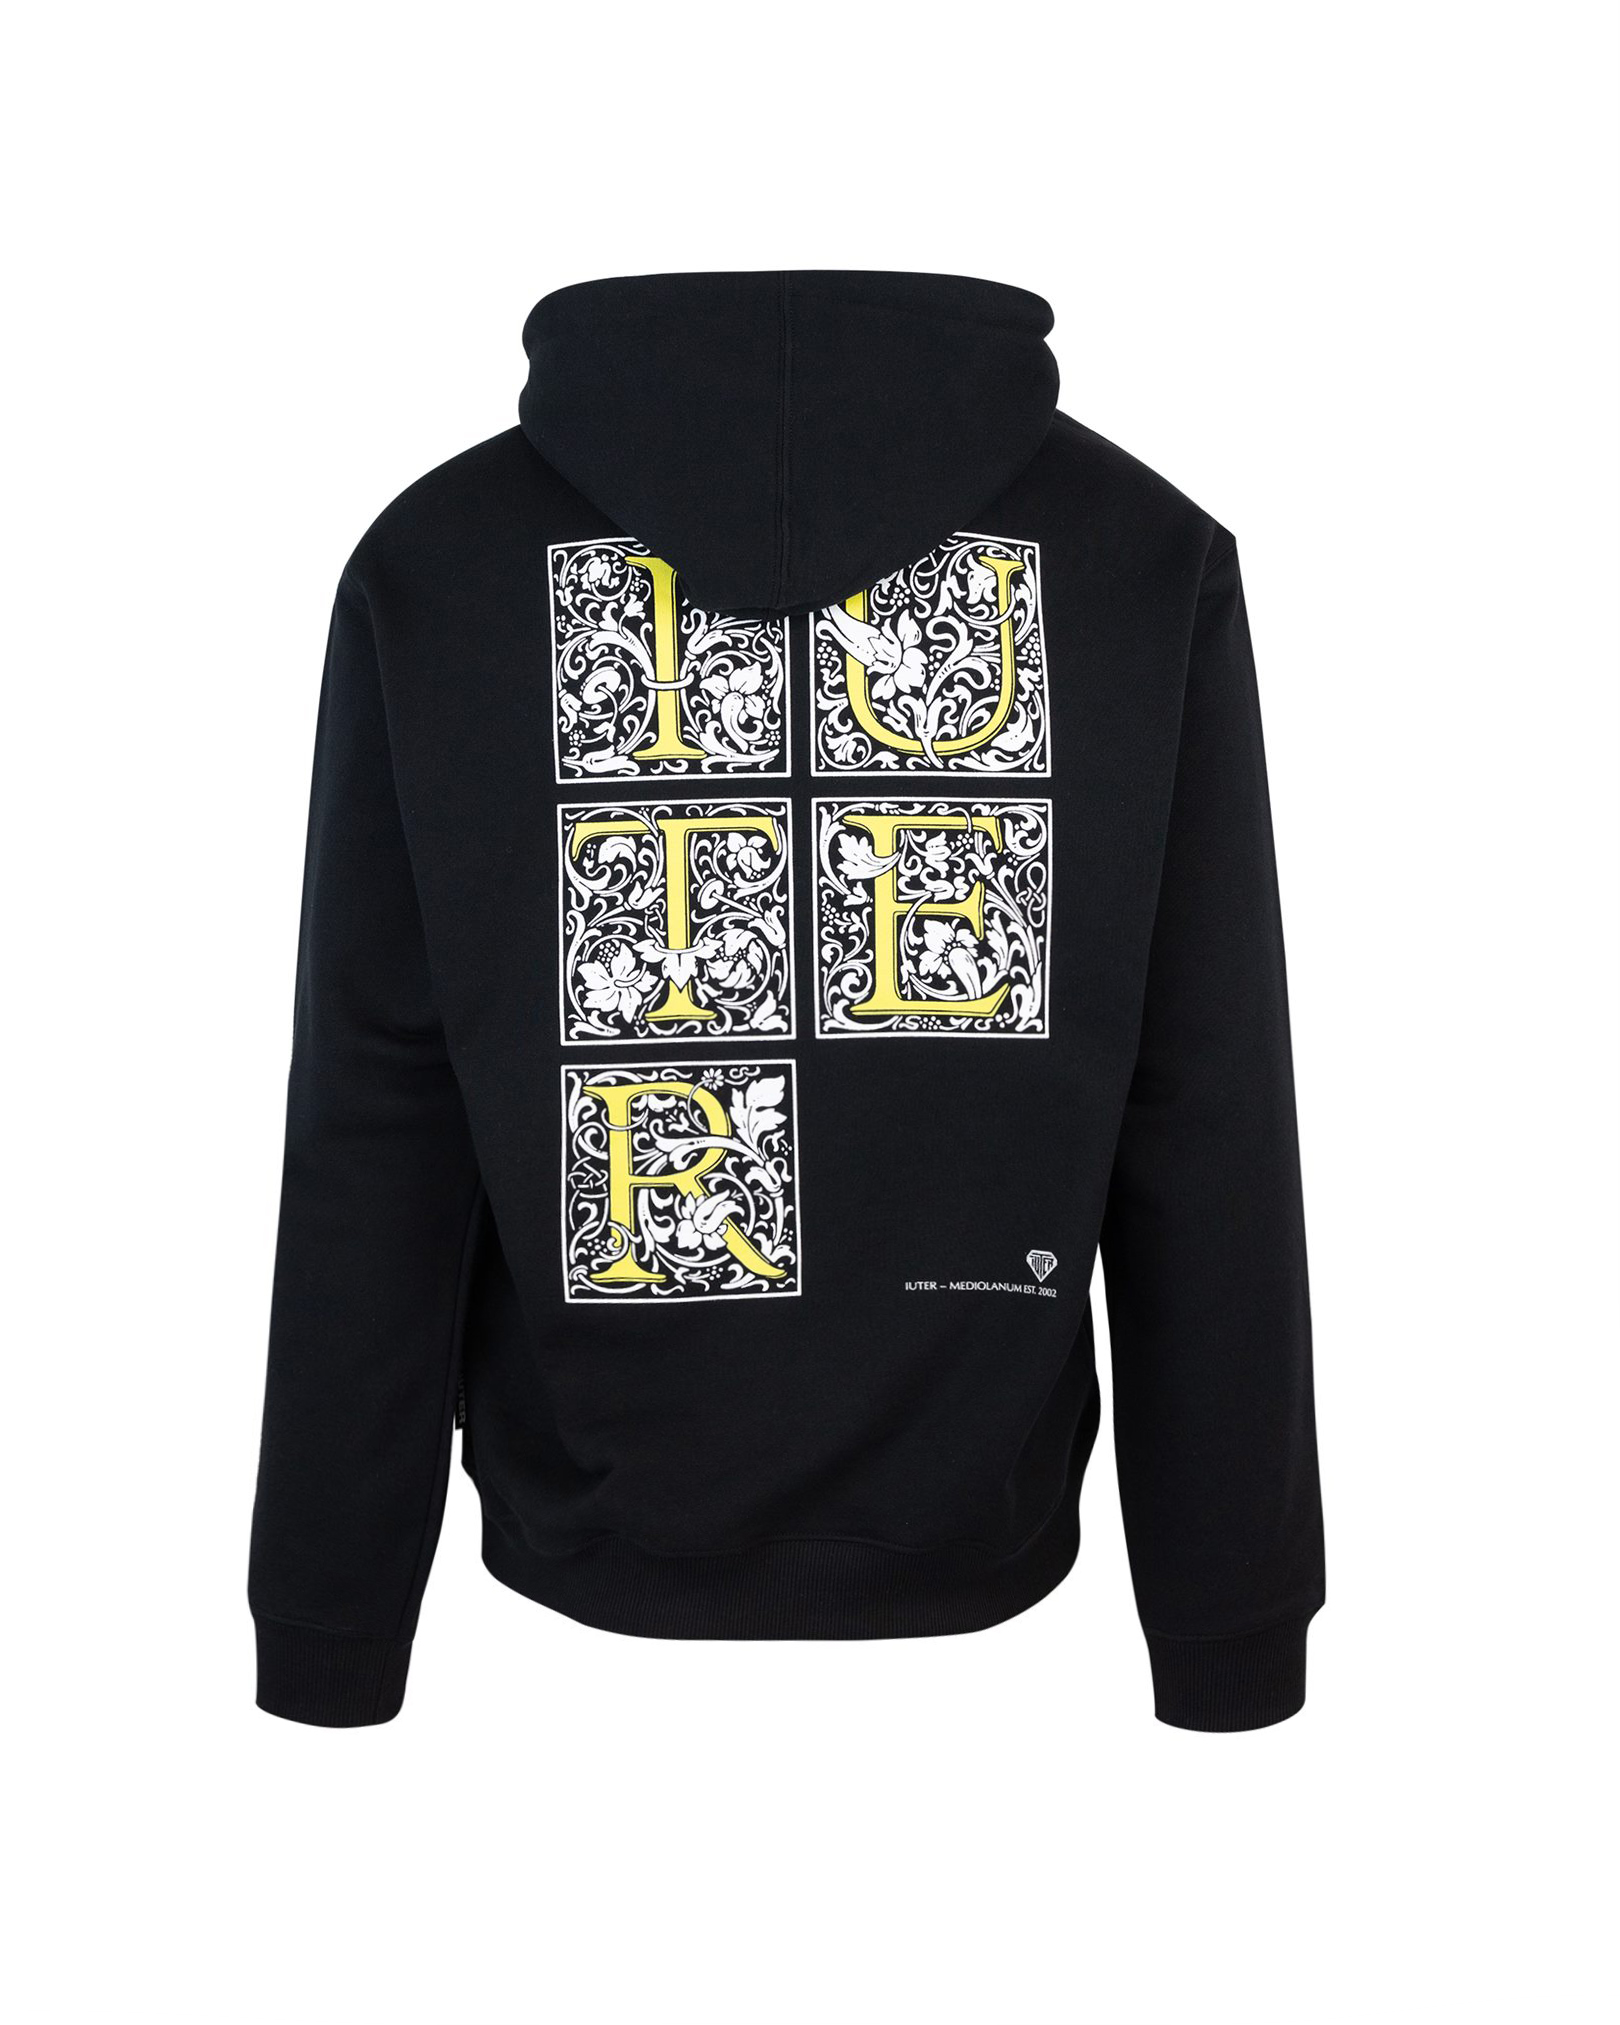 Shop Iuter Mediolanum Sweatshirt With Hood In Black